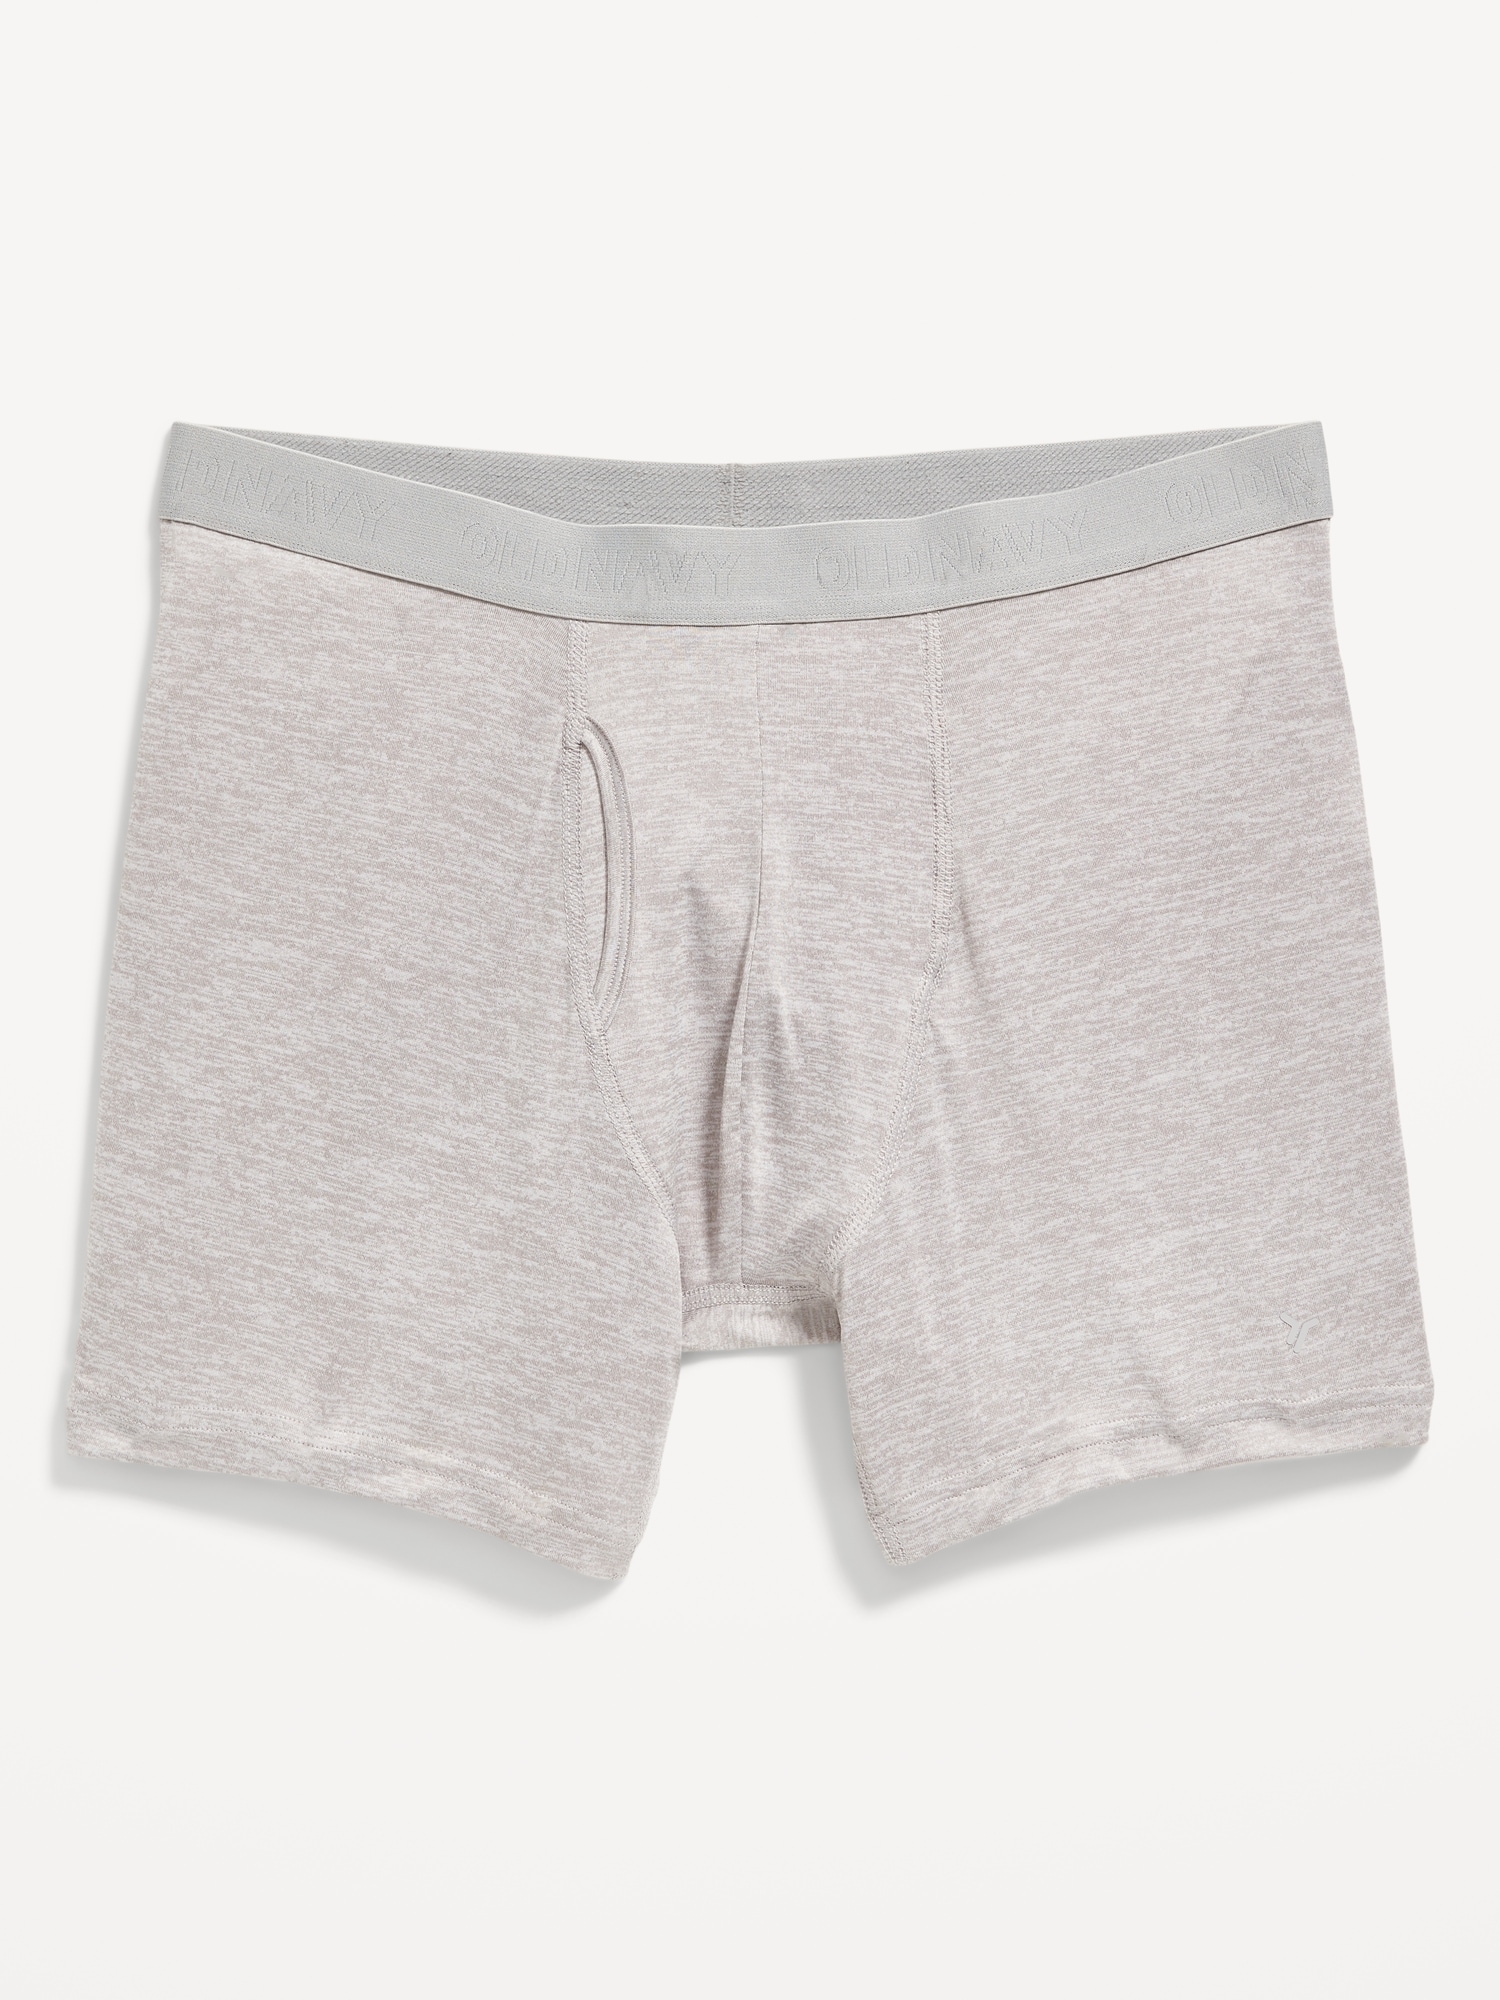 Men's Classic Nylon Seamless Boxer Briefs Underwear, Dragon One Size 